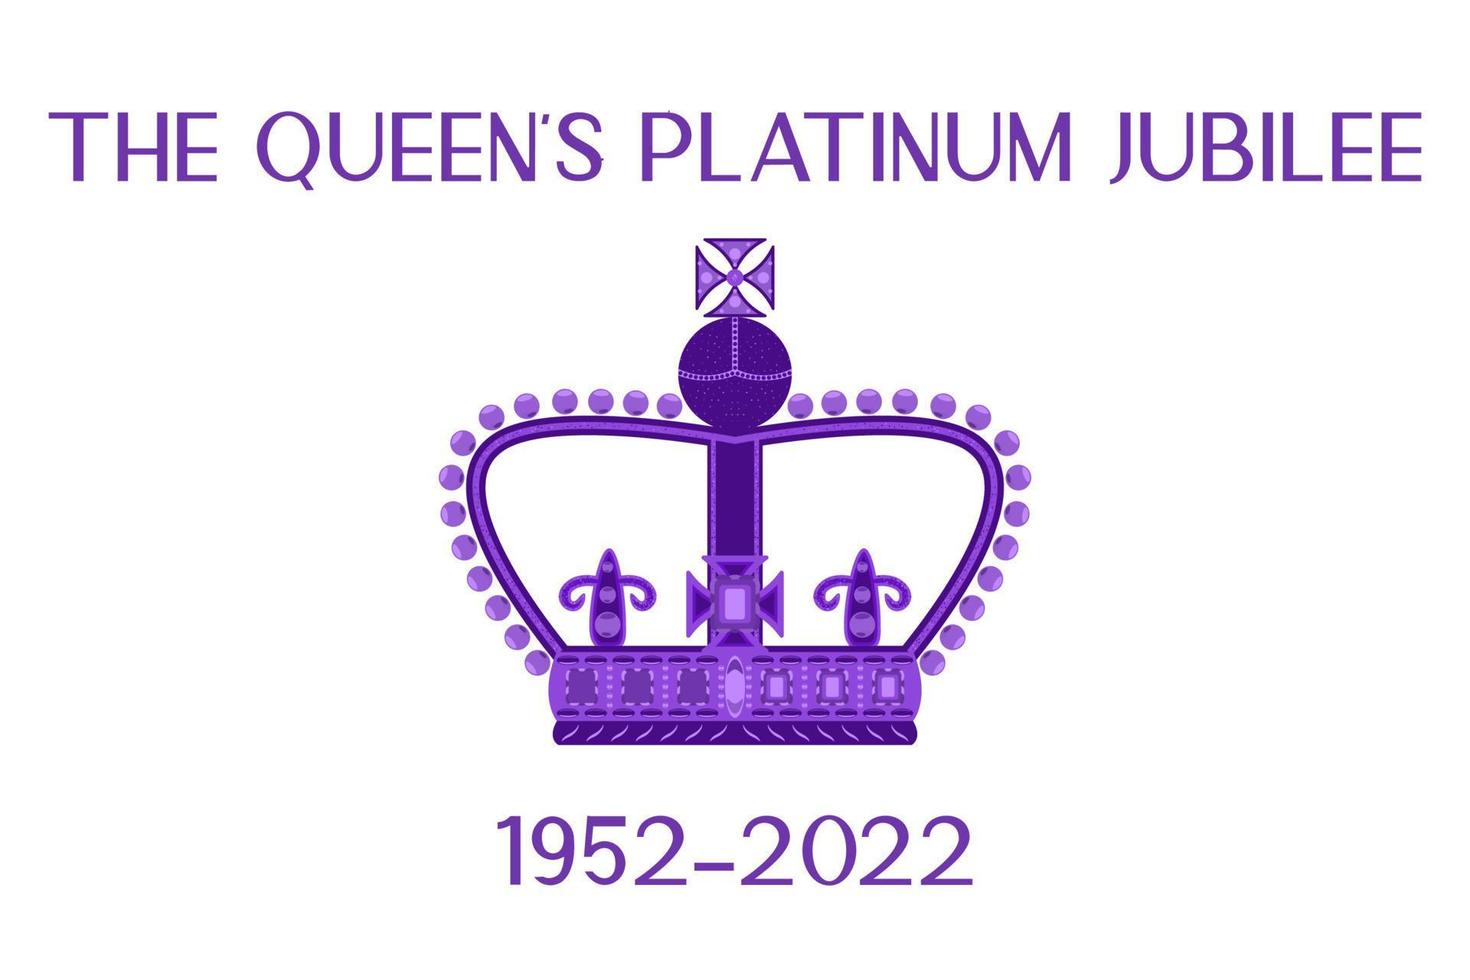 corona morada sobre fondo blanco. jubileo de platino de la reina 2022. 70 aniversario de la familia real y la pancarta del trono vector